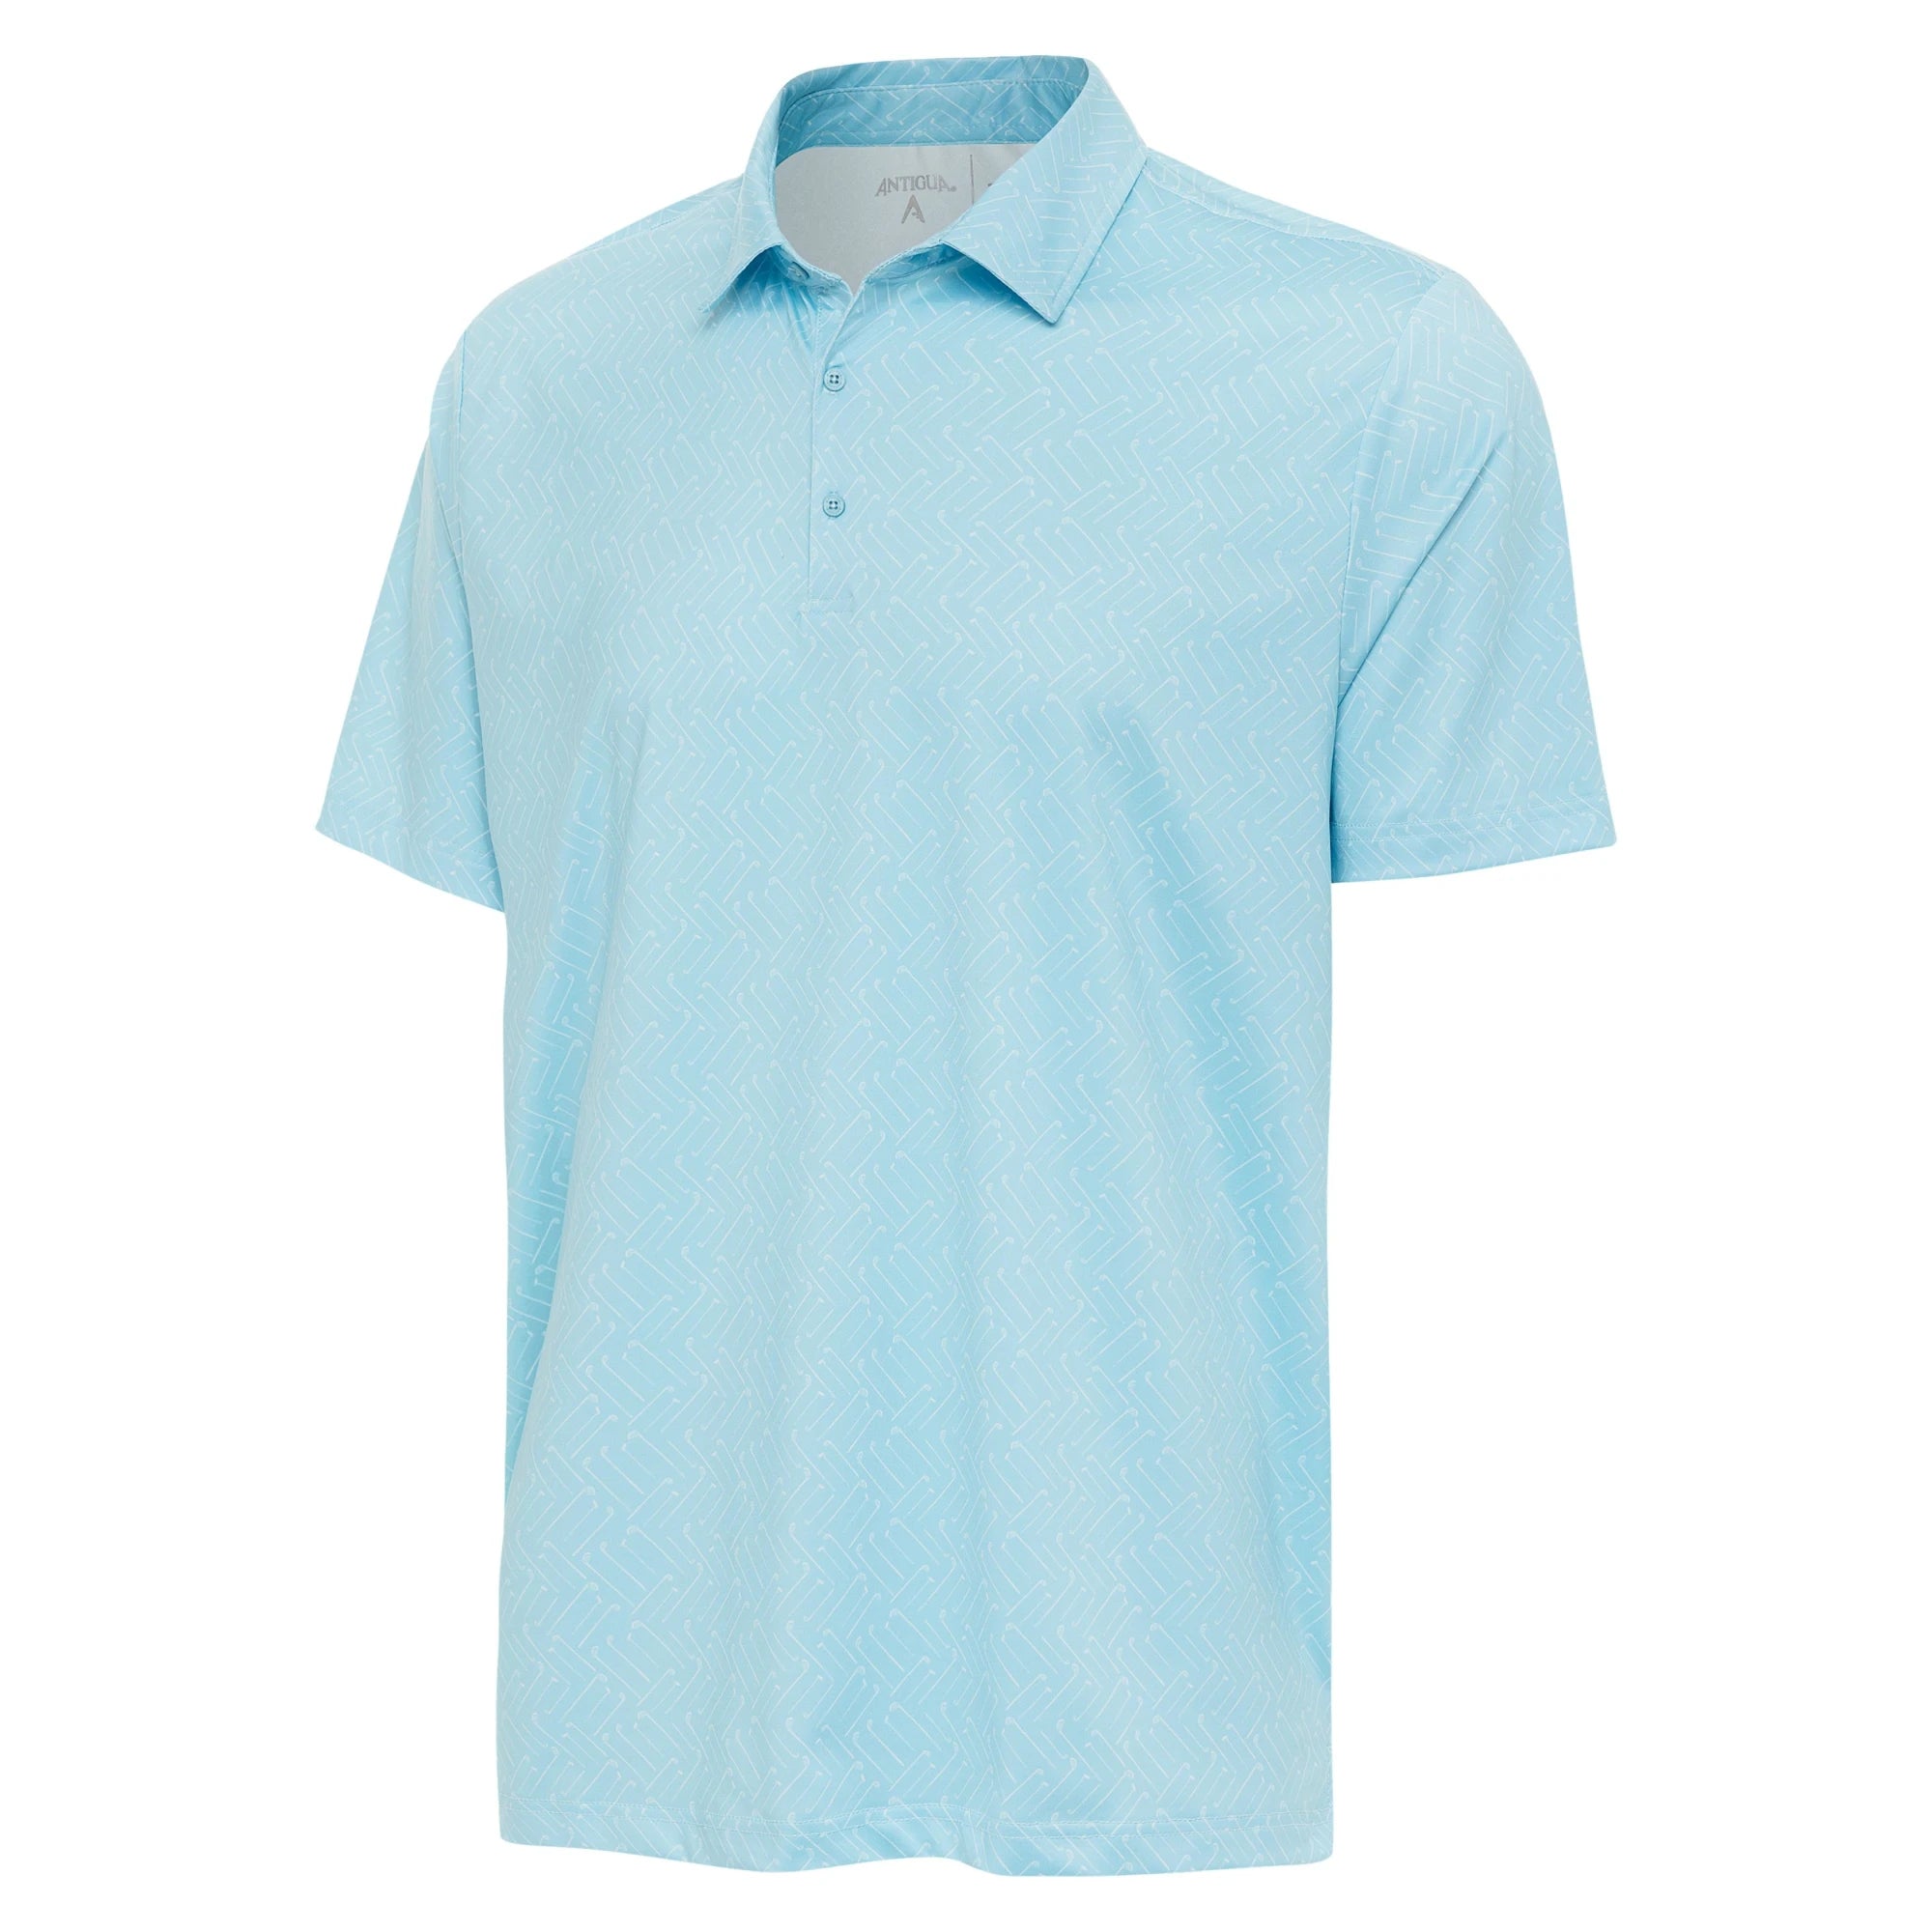 Mens Antigua Clubs Short Sleeve Polo Powder Blue/Optic White